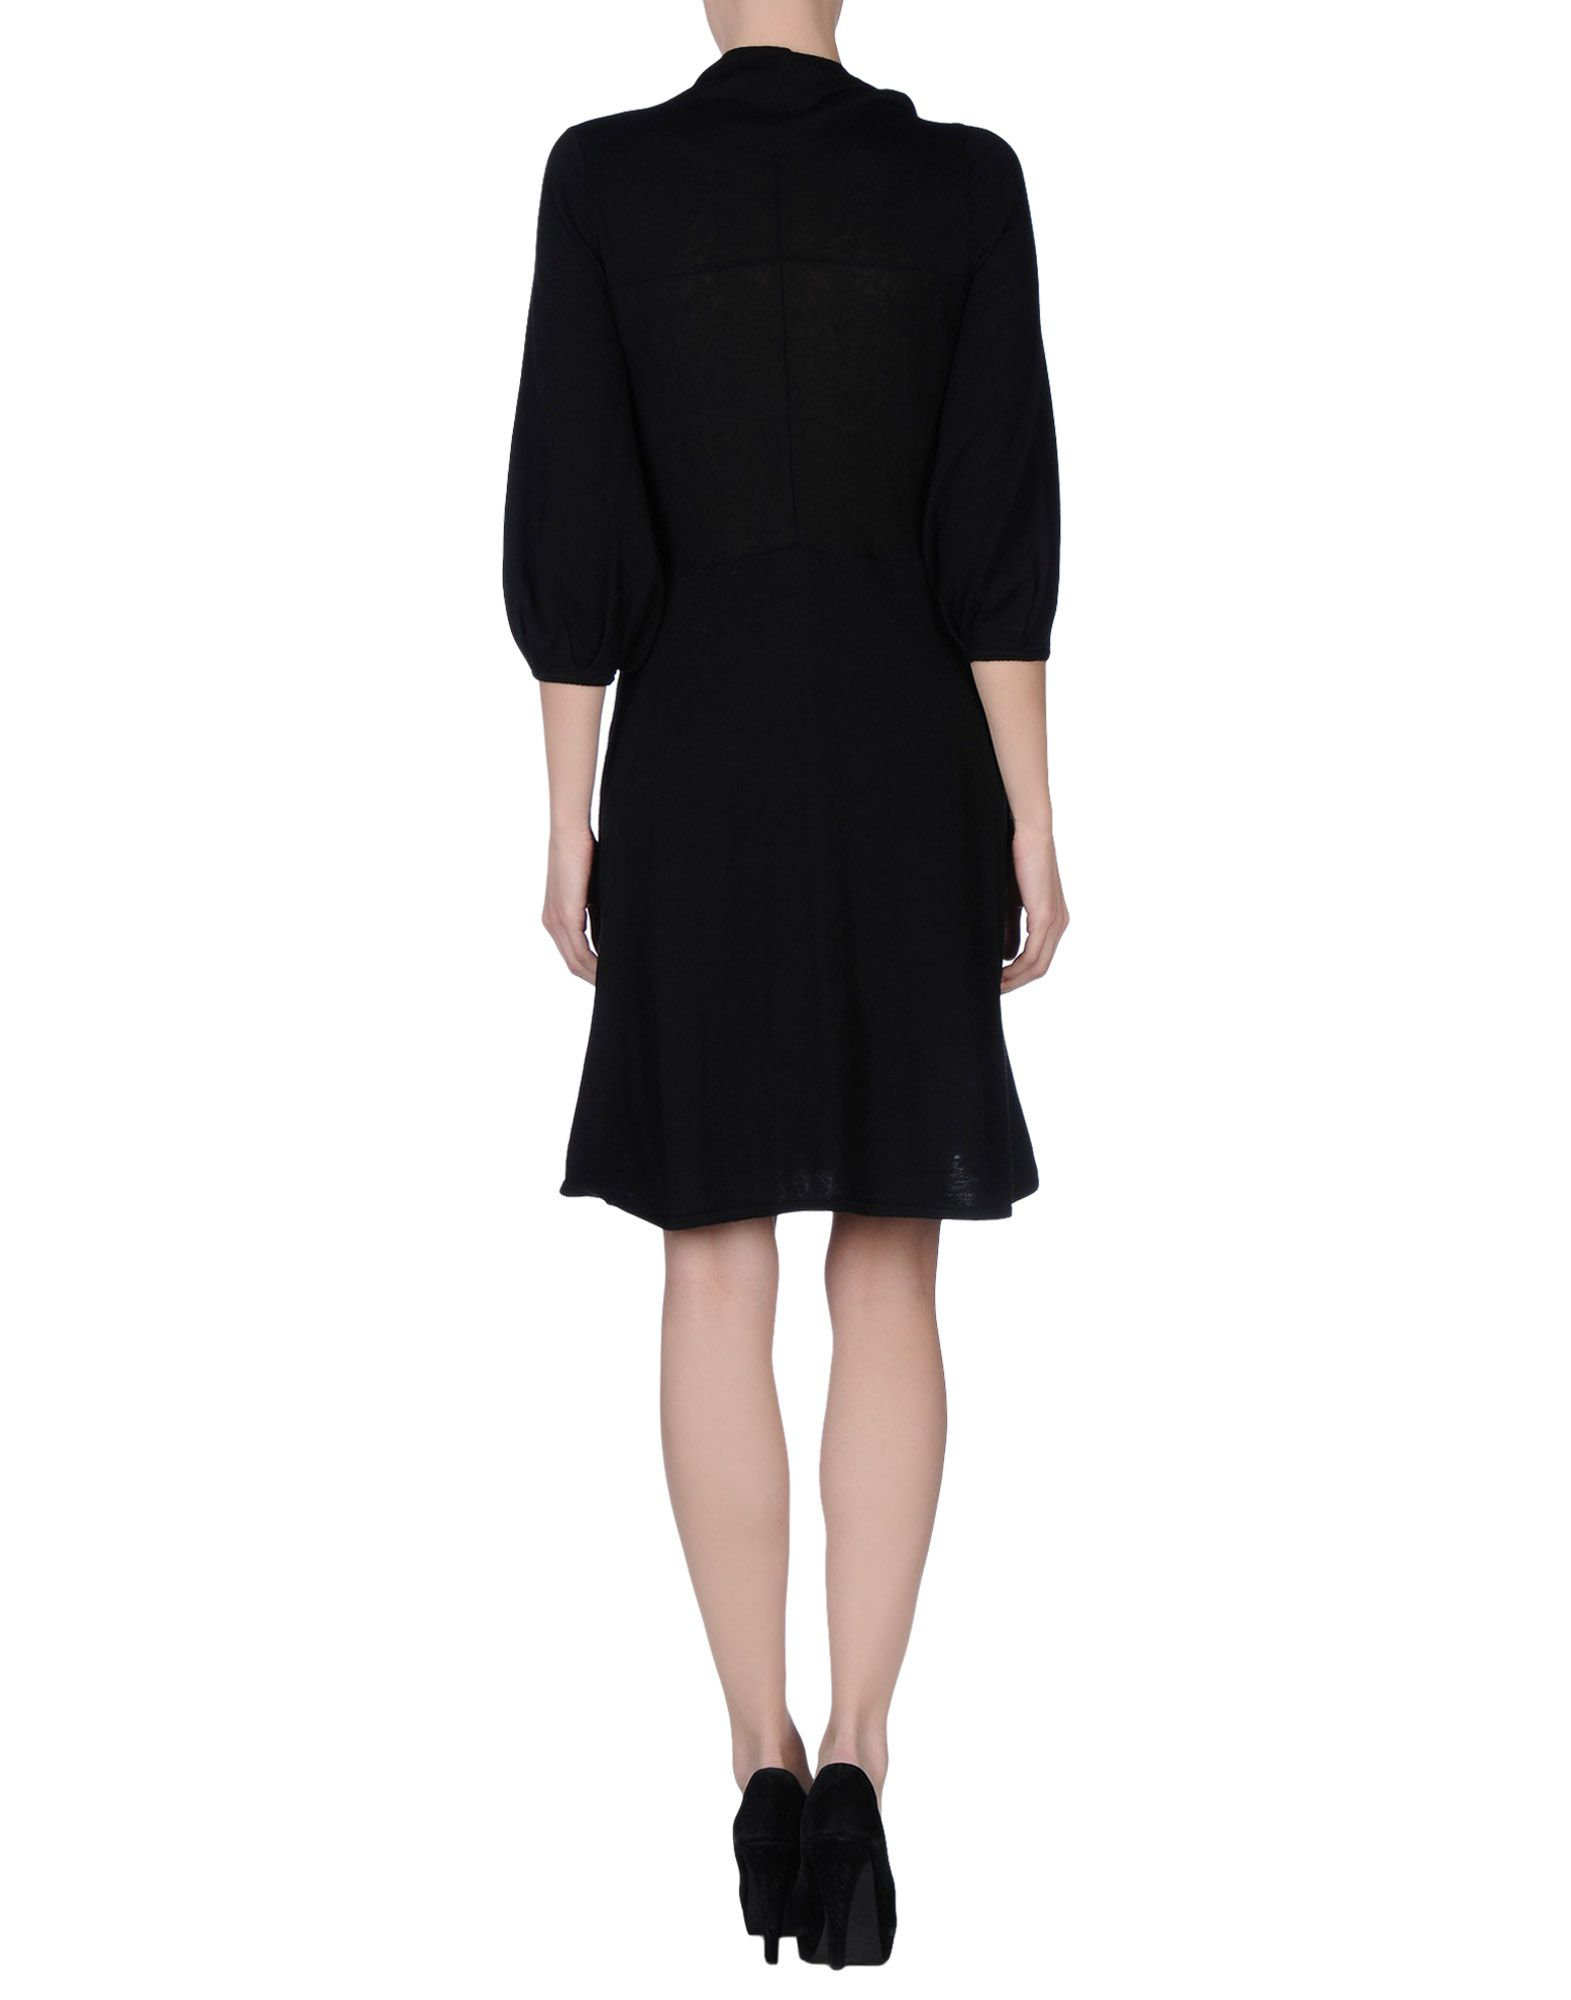 Lyst - John Galliano Knee-length Dress in Black